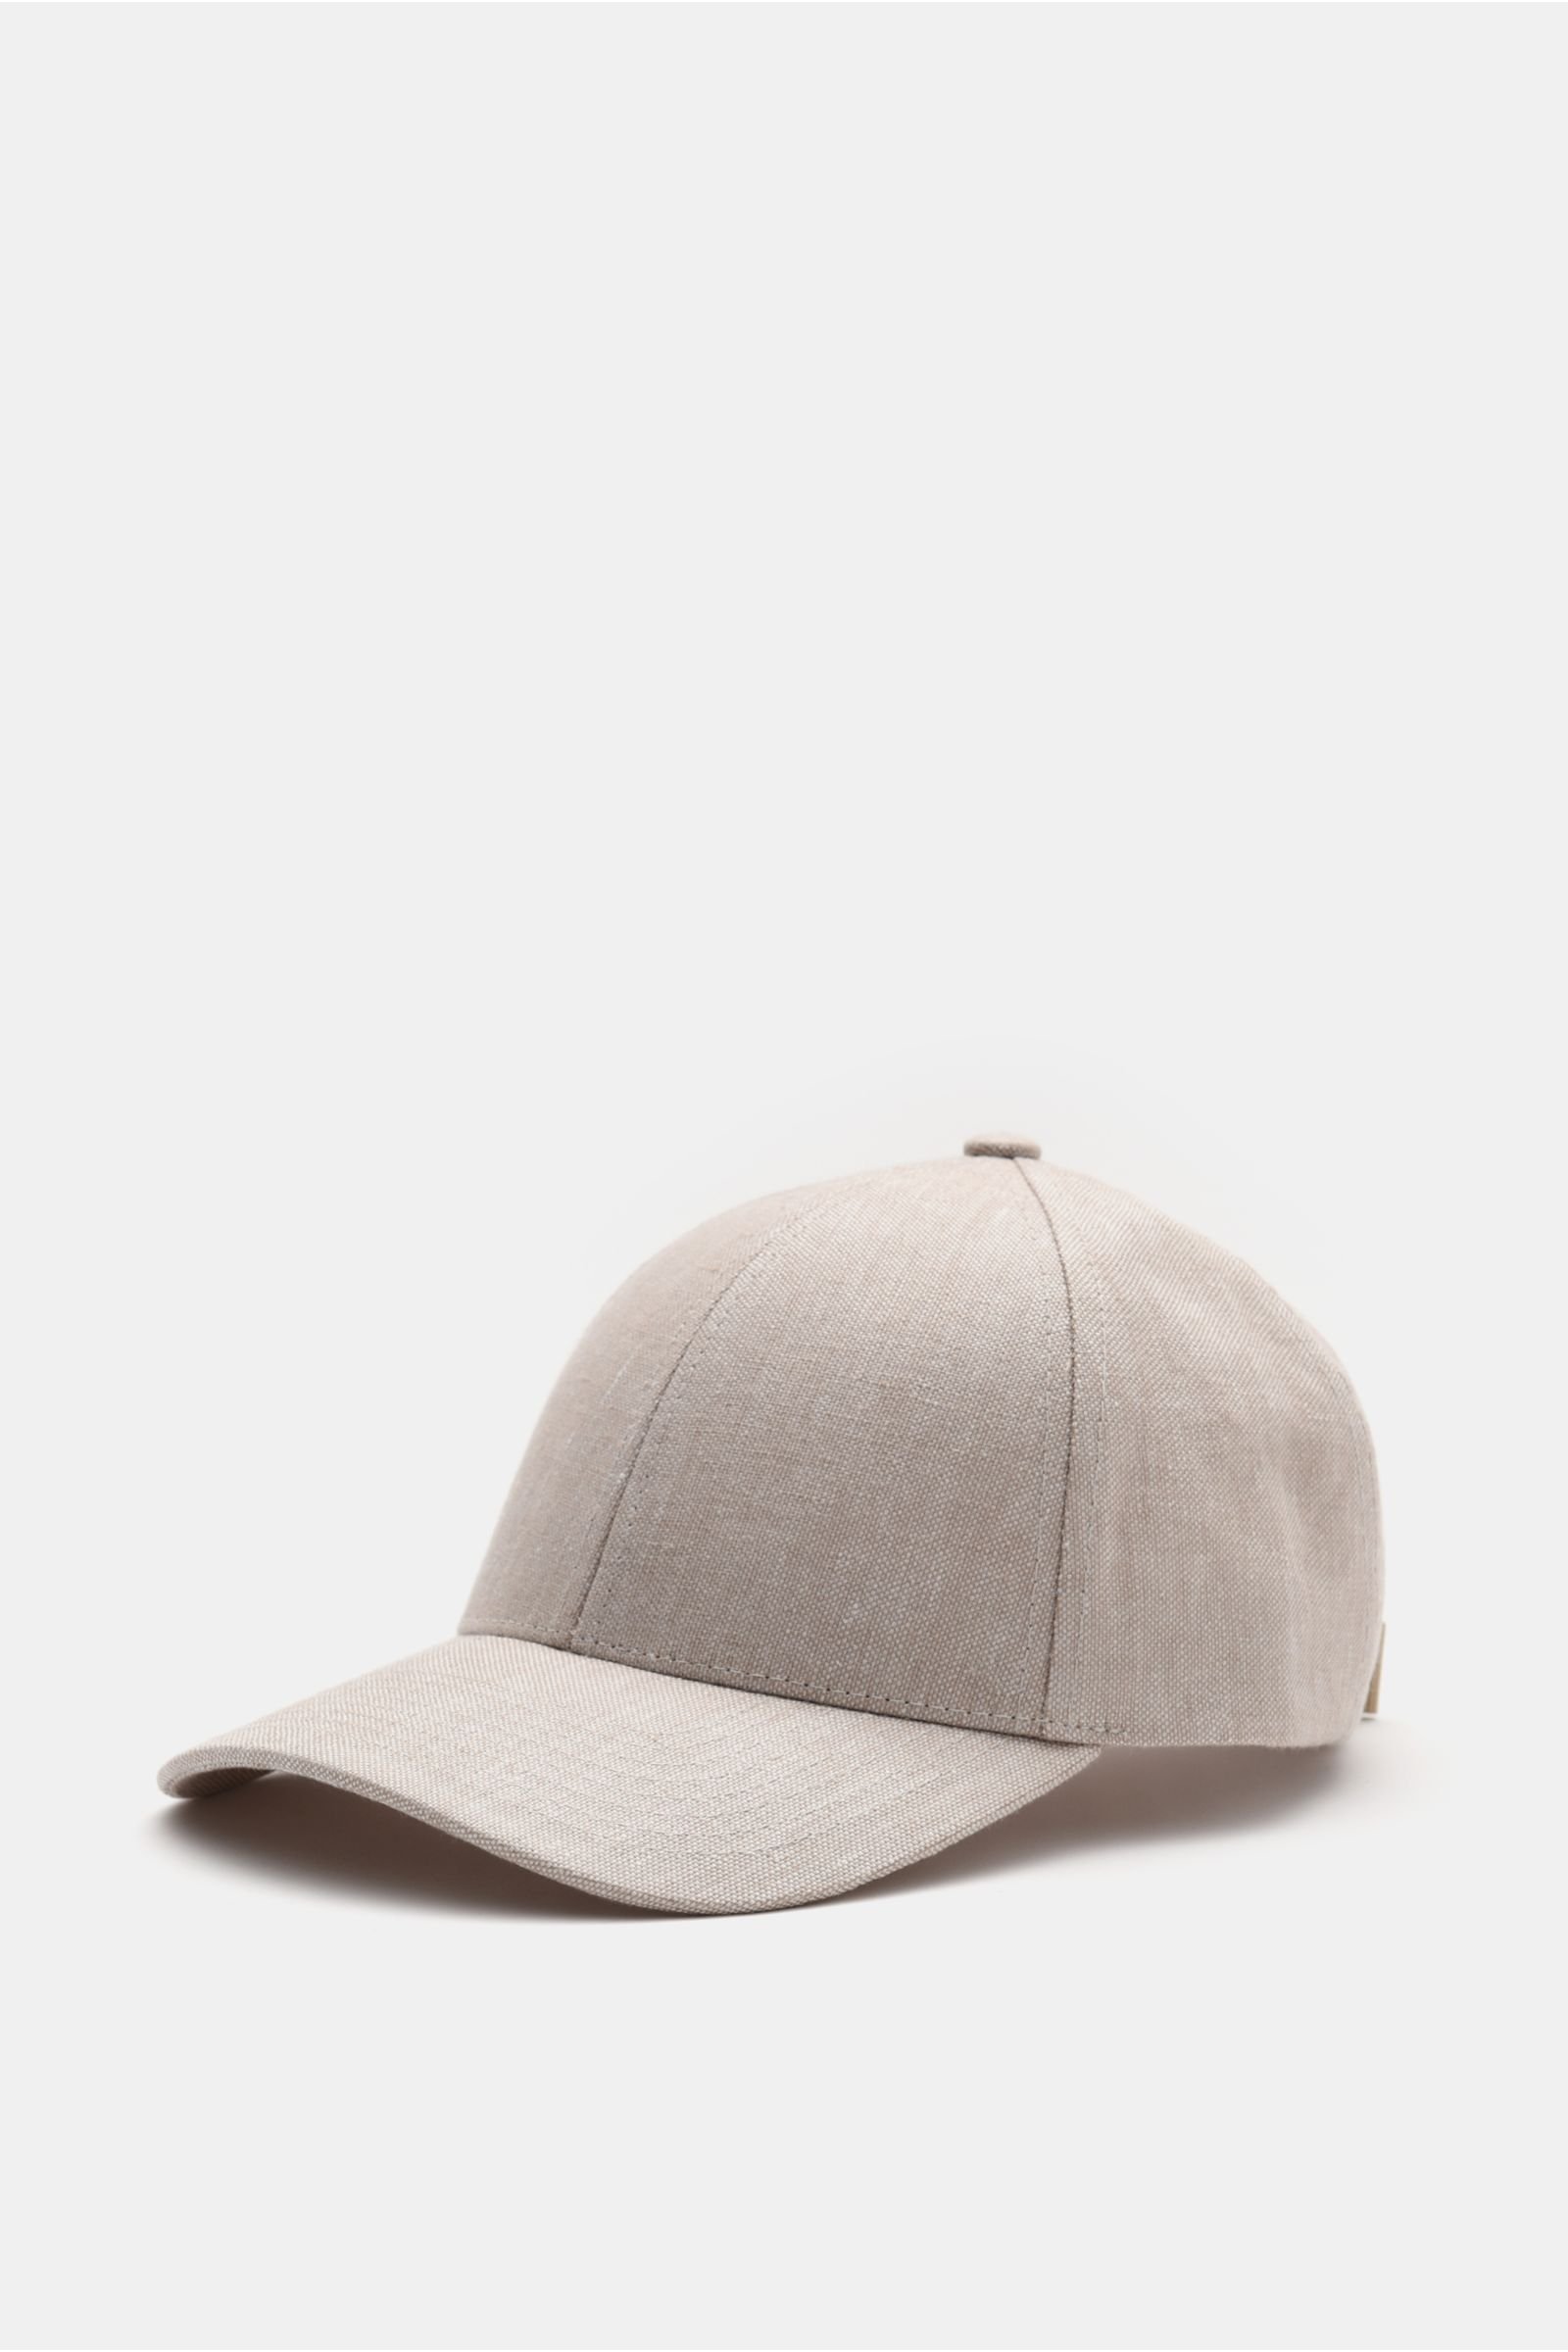 VARSITY HEADWEAR linen baseball cap | beige BRAUN Hamburg